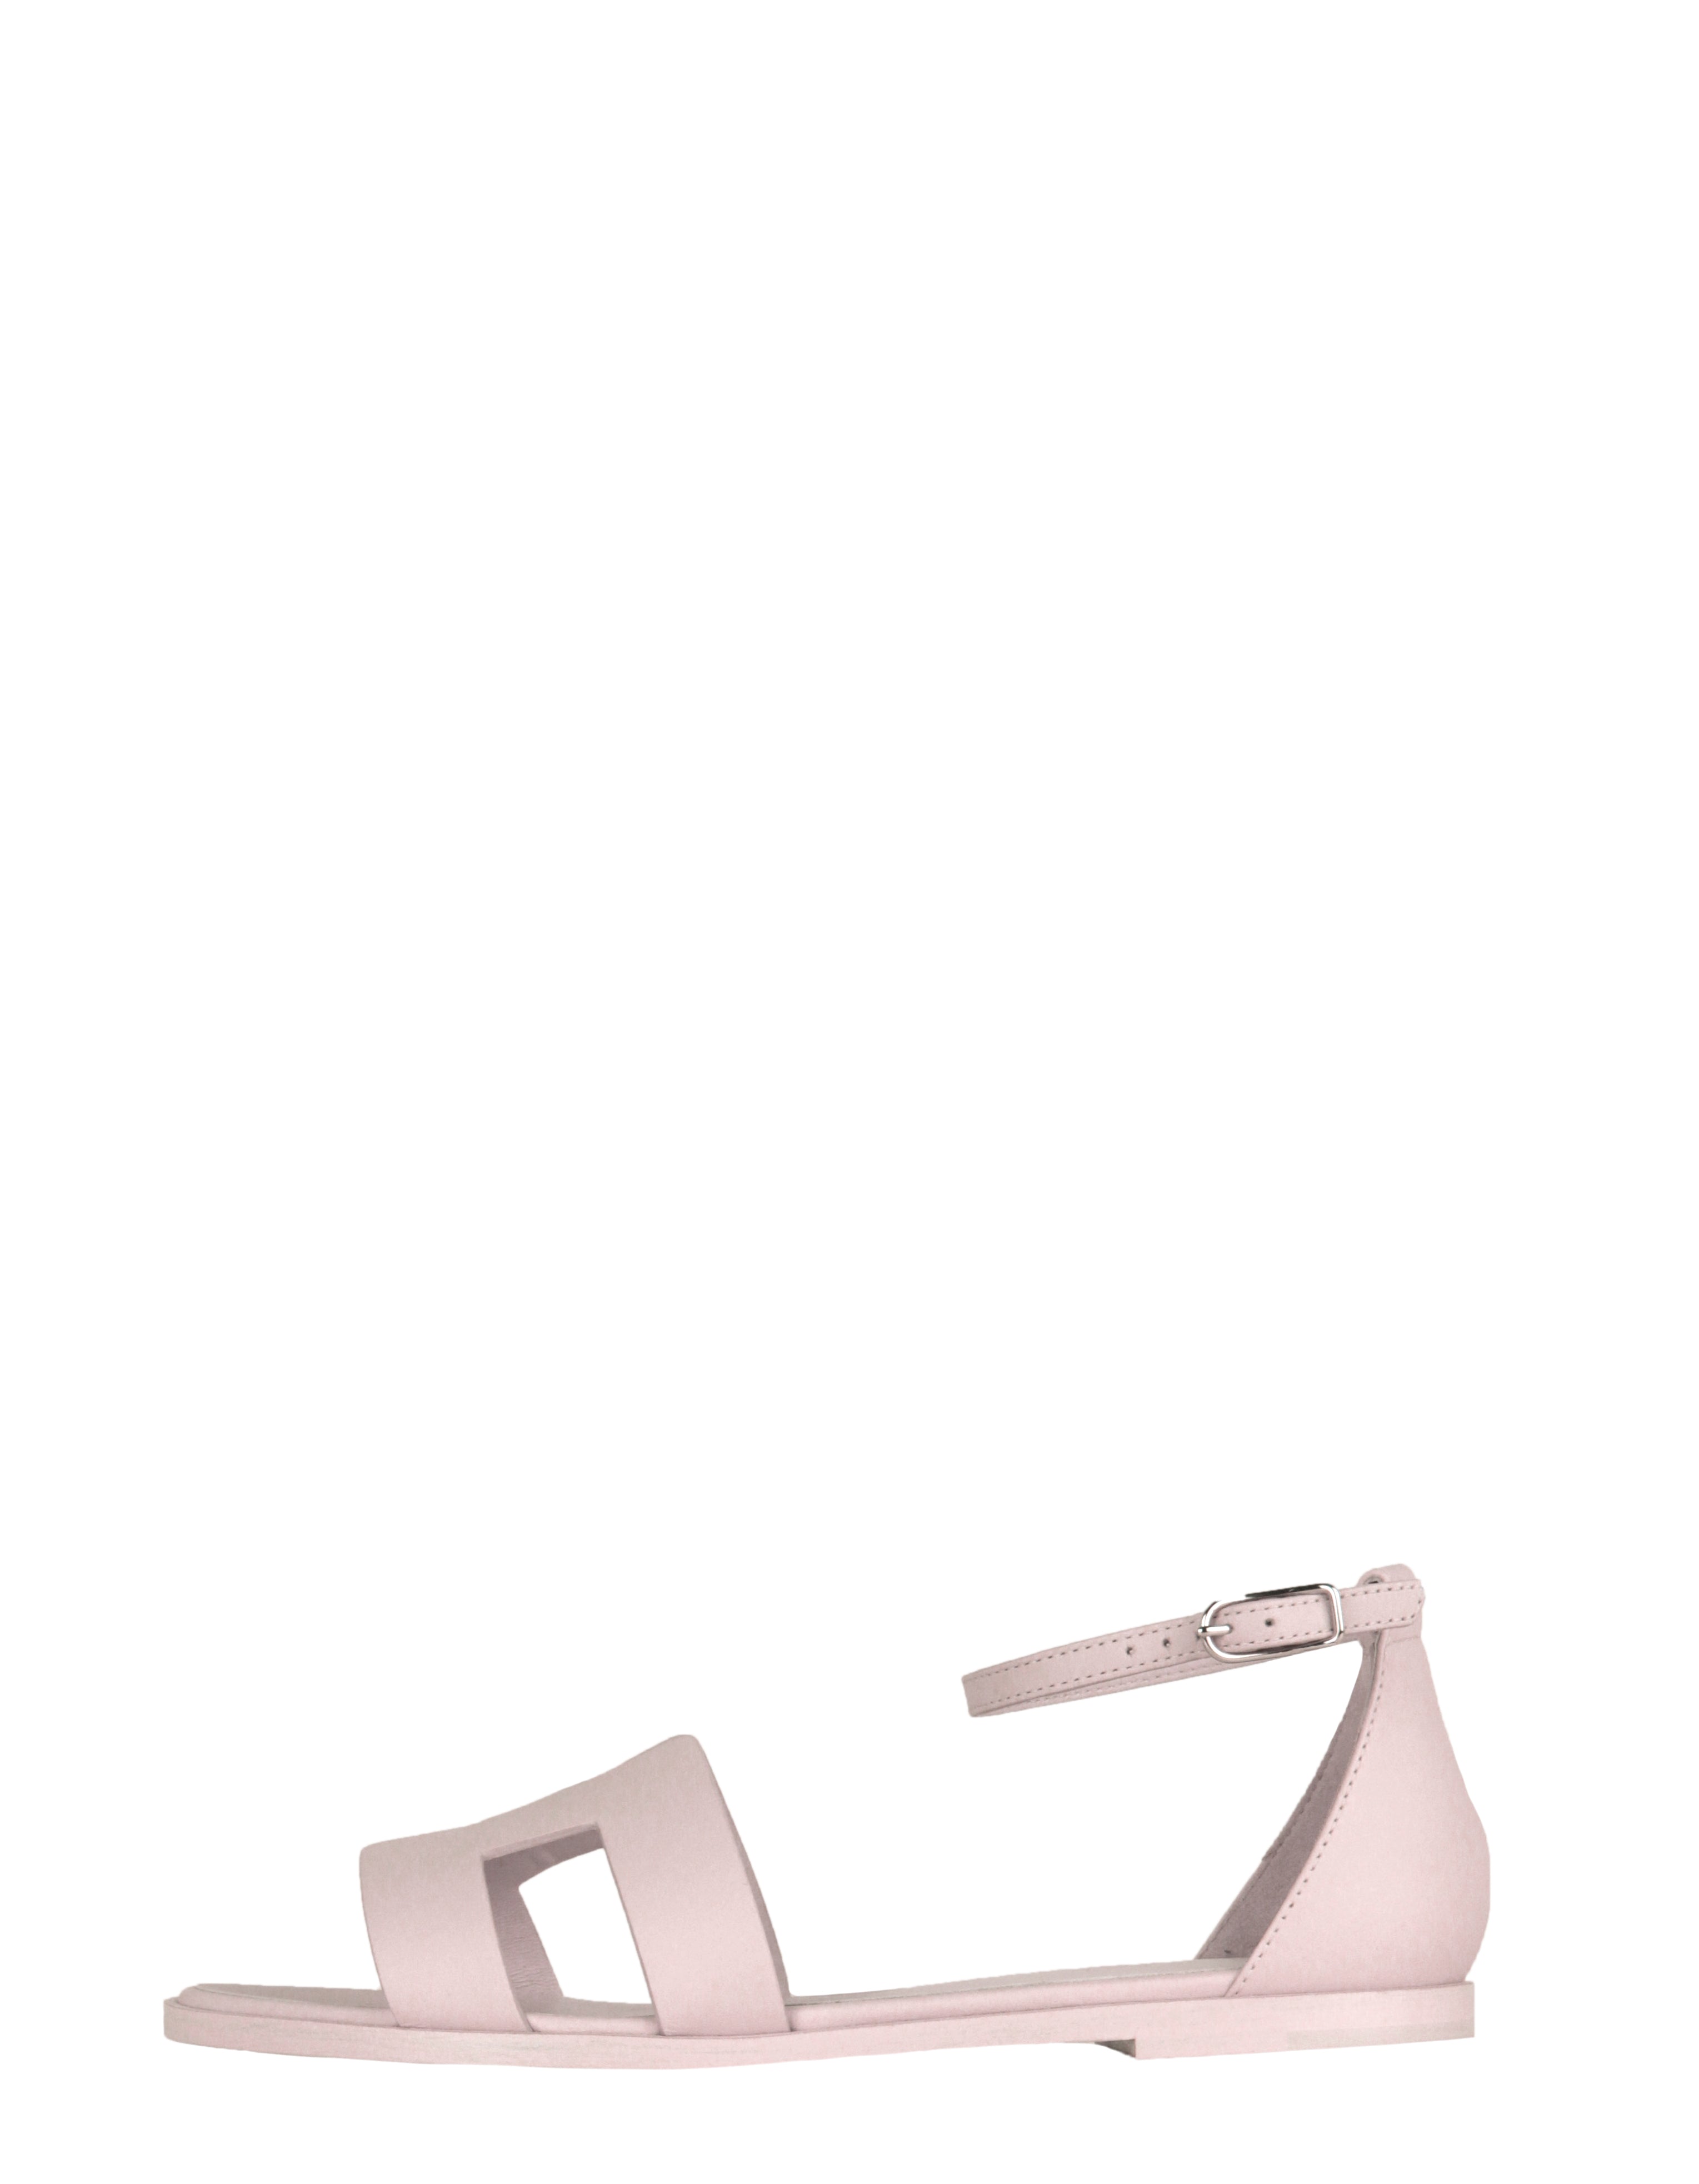 Hermes NEW Light Pink Santorini H Sandals sz 37.5